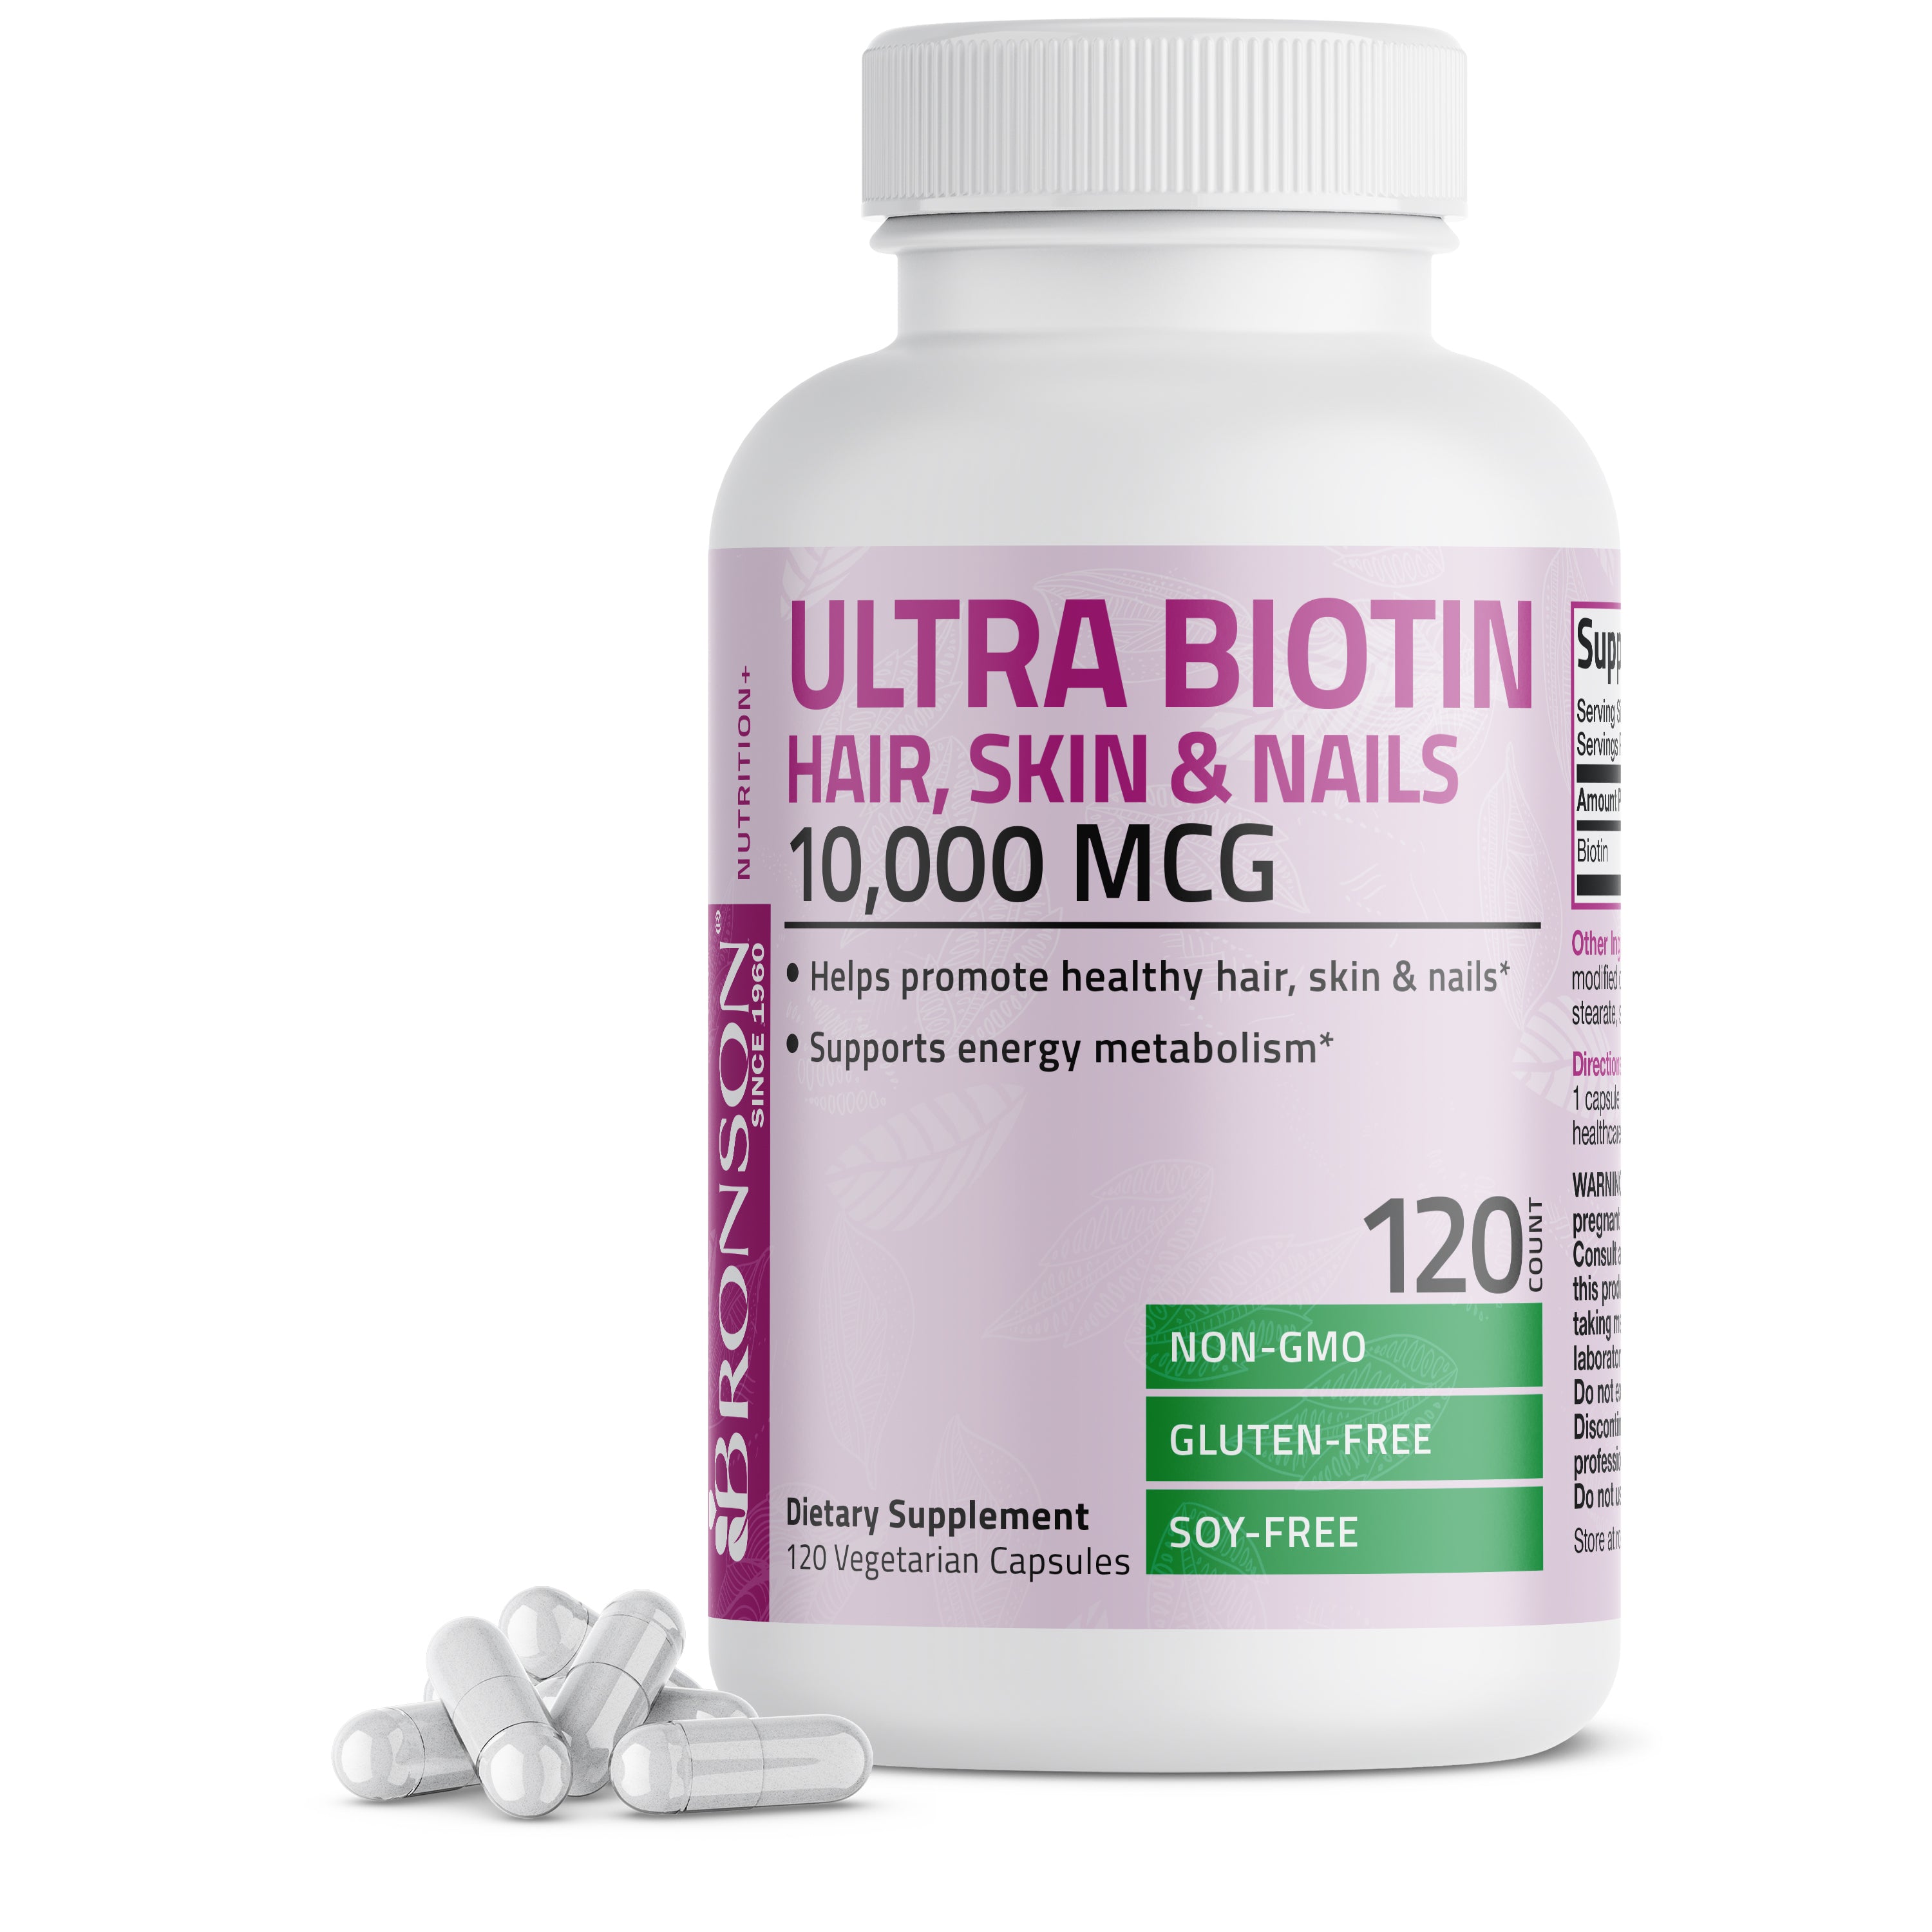 Ultra Biotin Hair, Skin & Nails - 10,000 mcg view 3 of 14